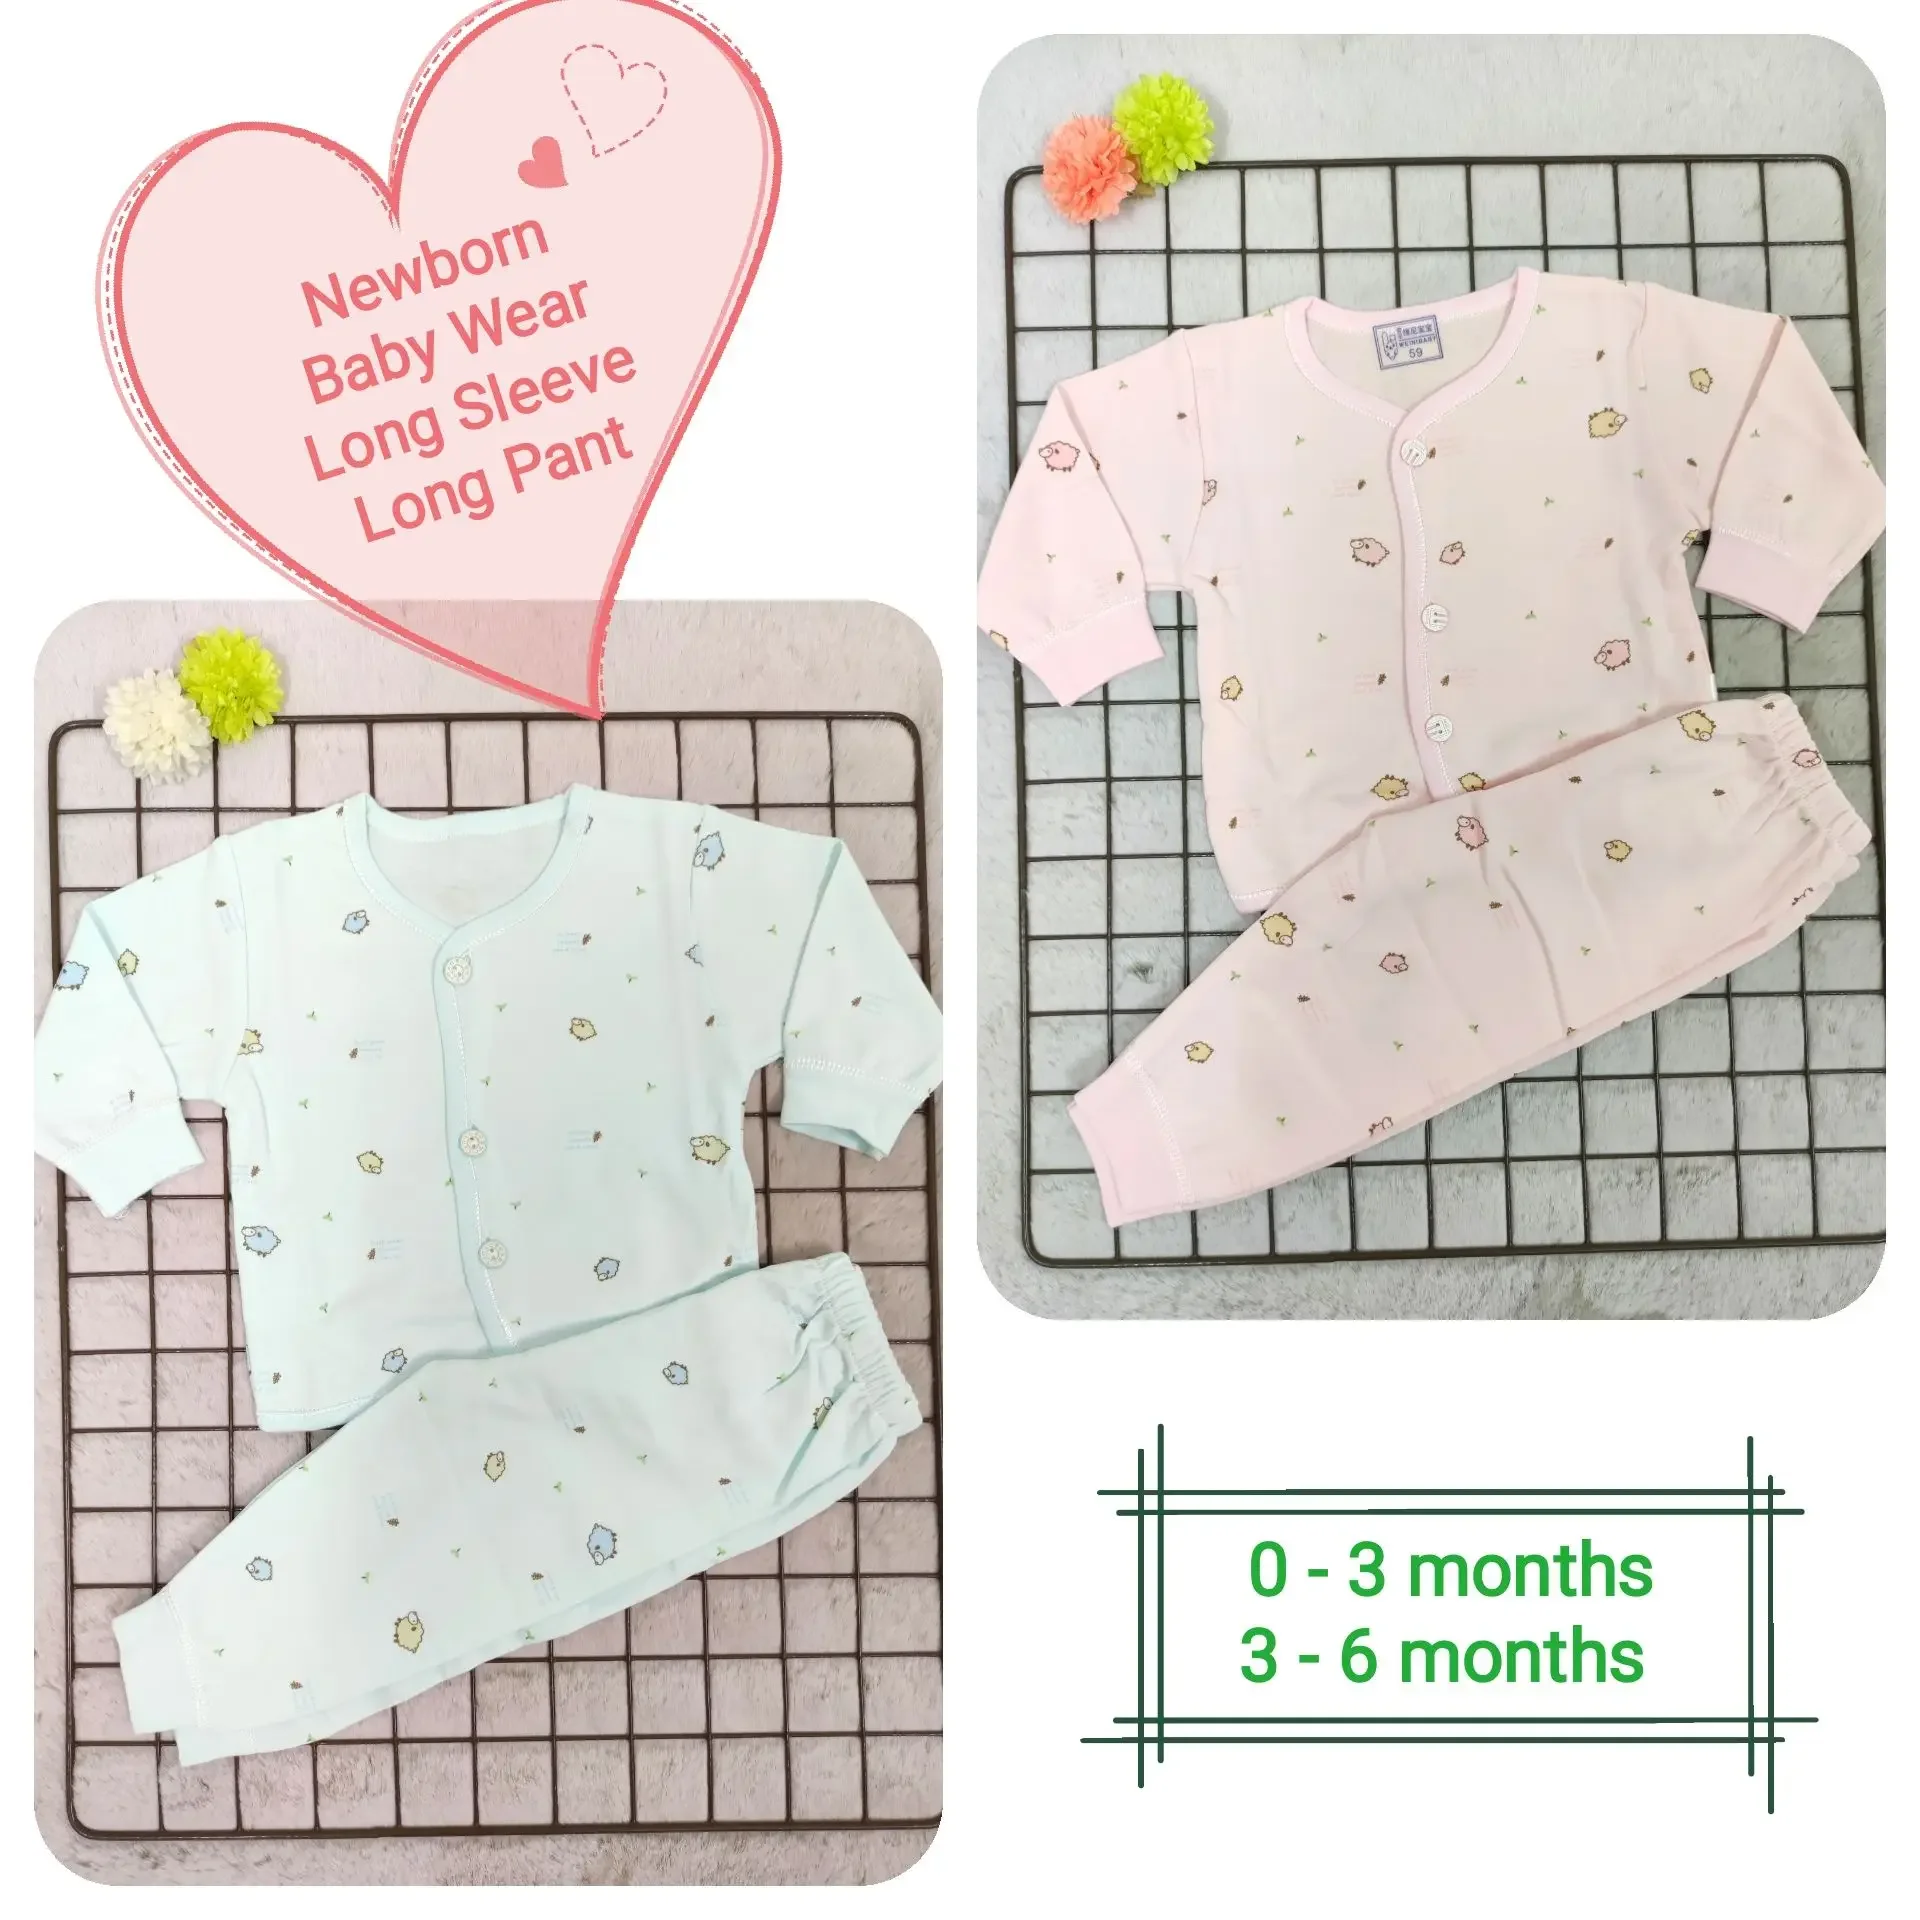 Premium Newborn Baby Wear / Baby Night Wear / Baju Bayi / Baby Long Sleeve Long Pant 0-6 months